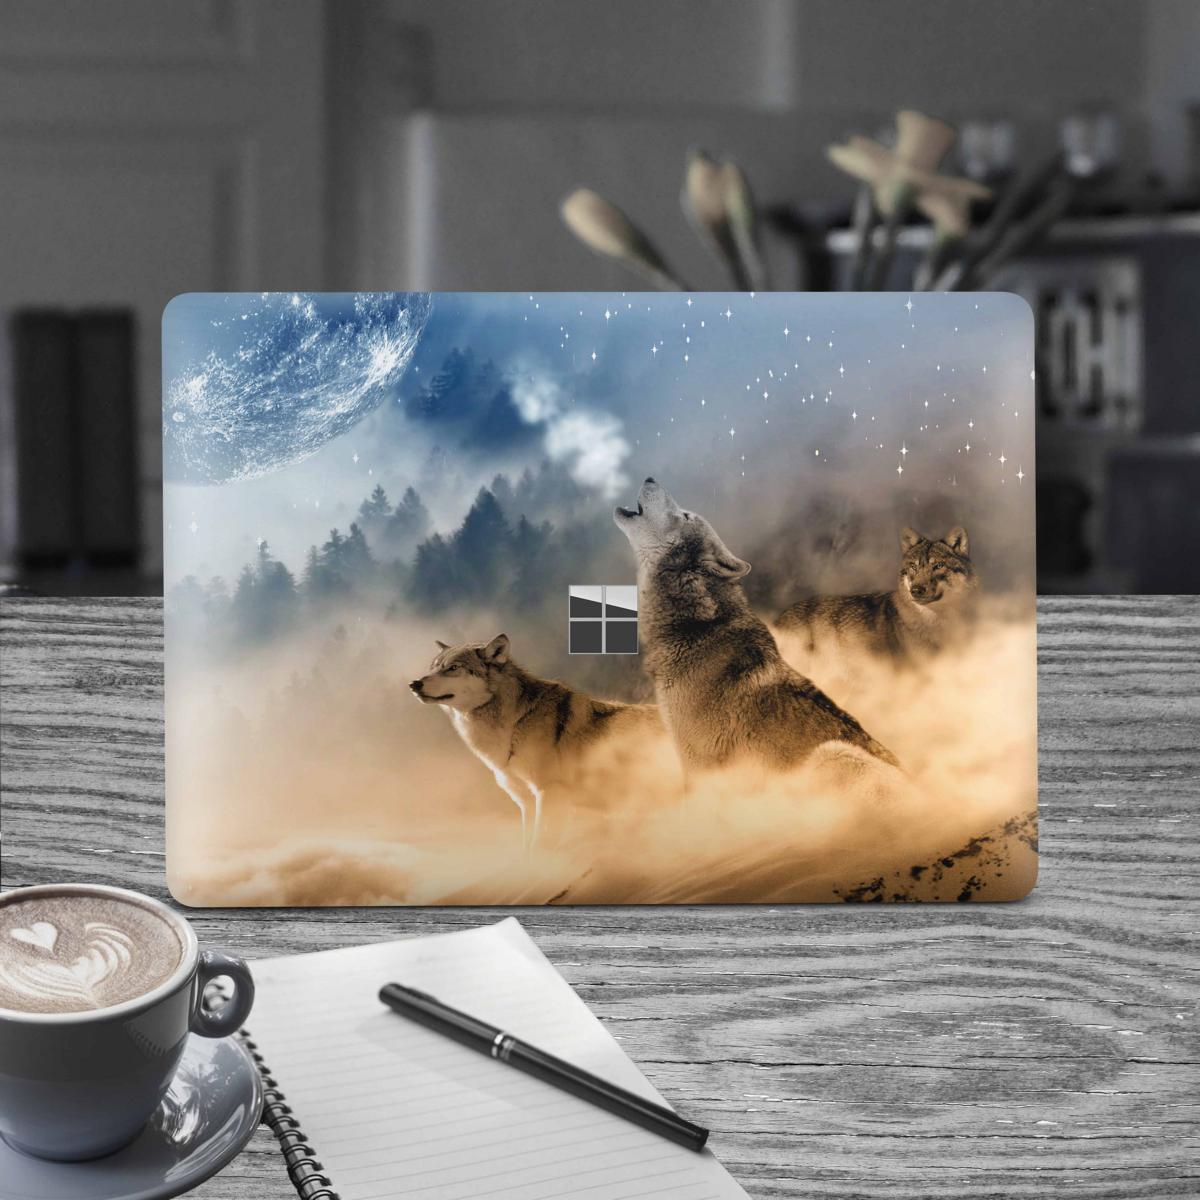 Microsoft Surface Book 2 Skin 15" Premium Vinylfolie Kratzerschutz Design Howling Moon Elektronik-Sticker & -Aufkleber Skins4u   